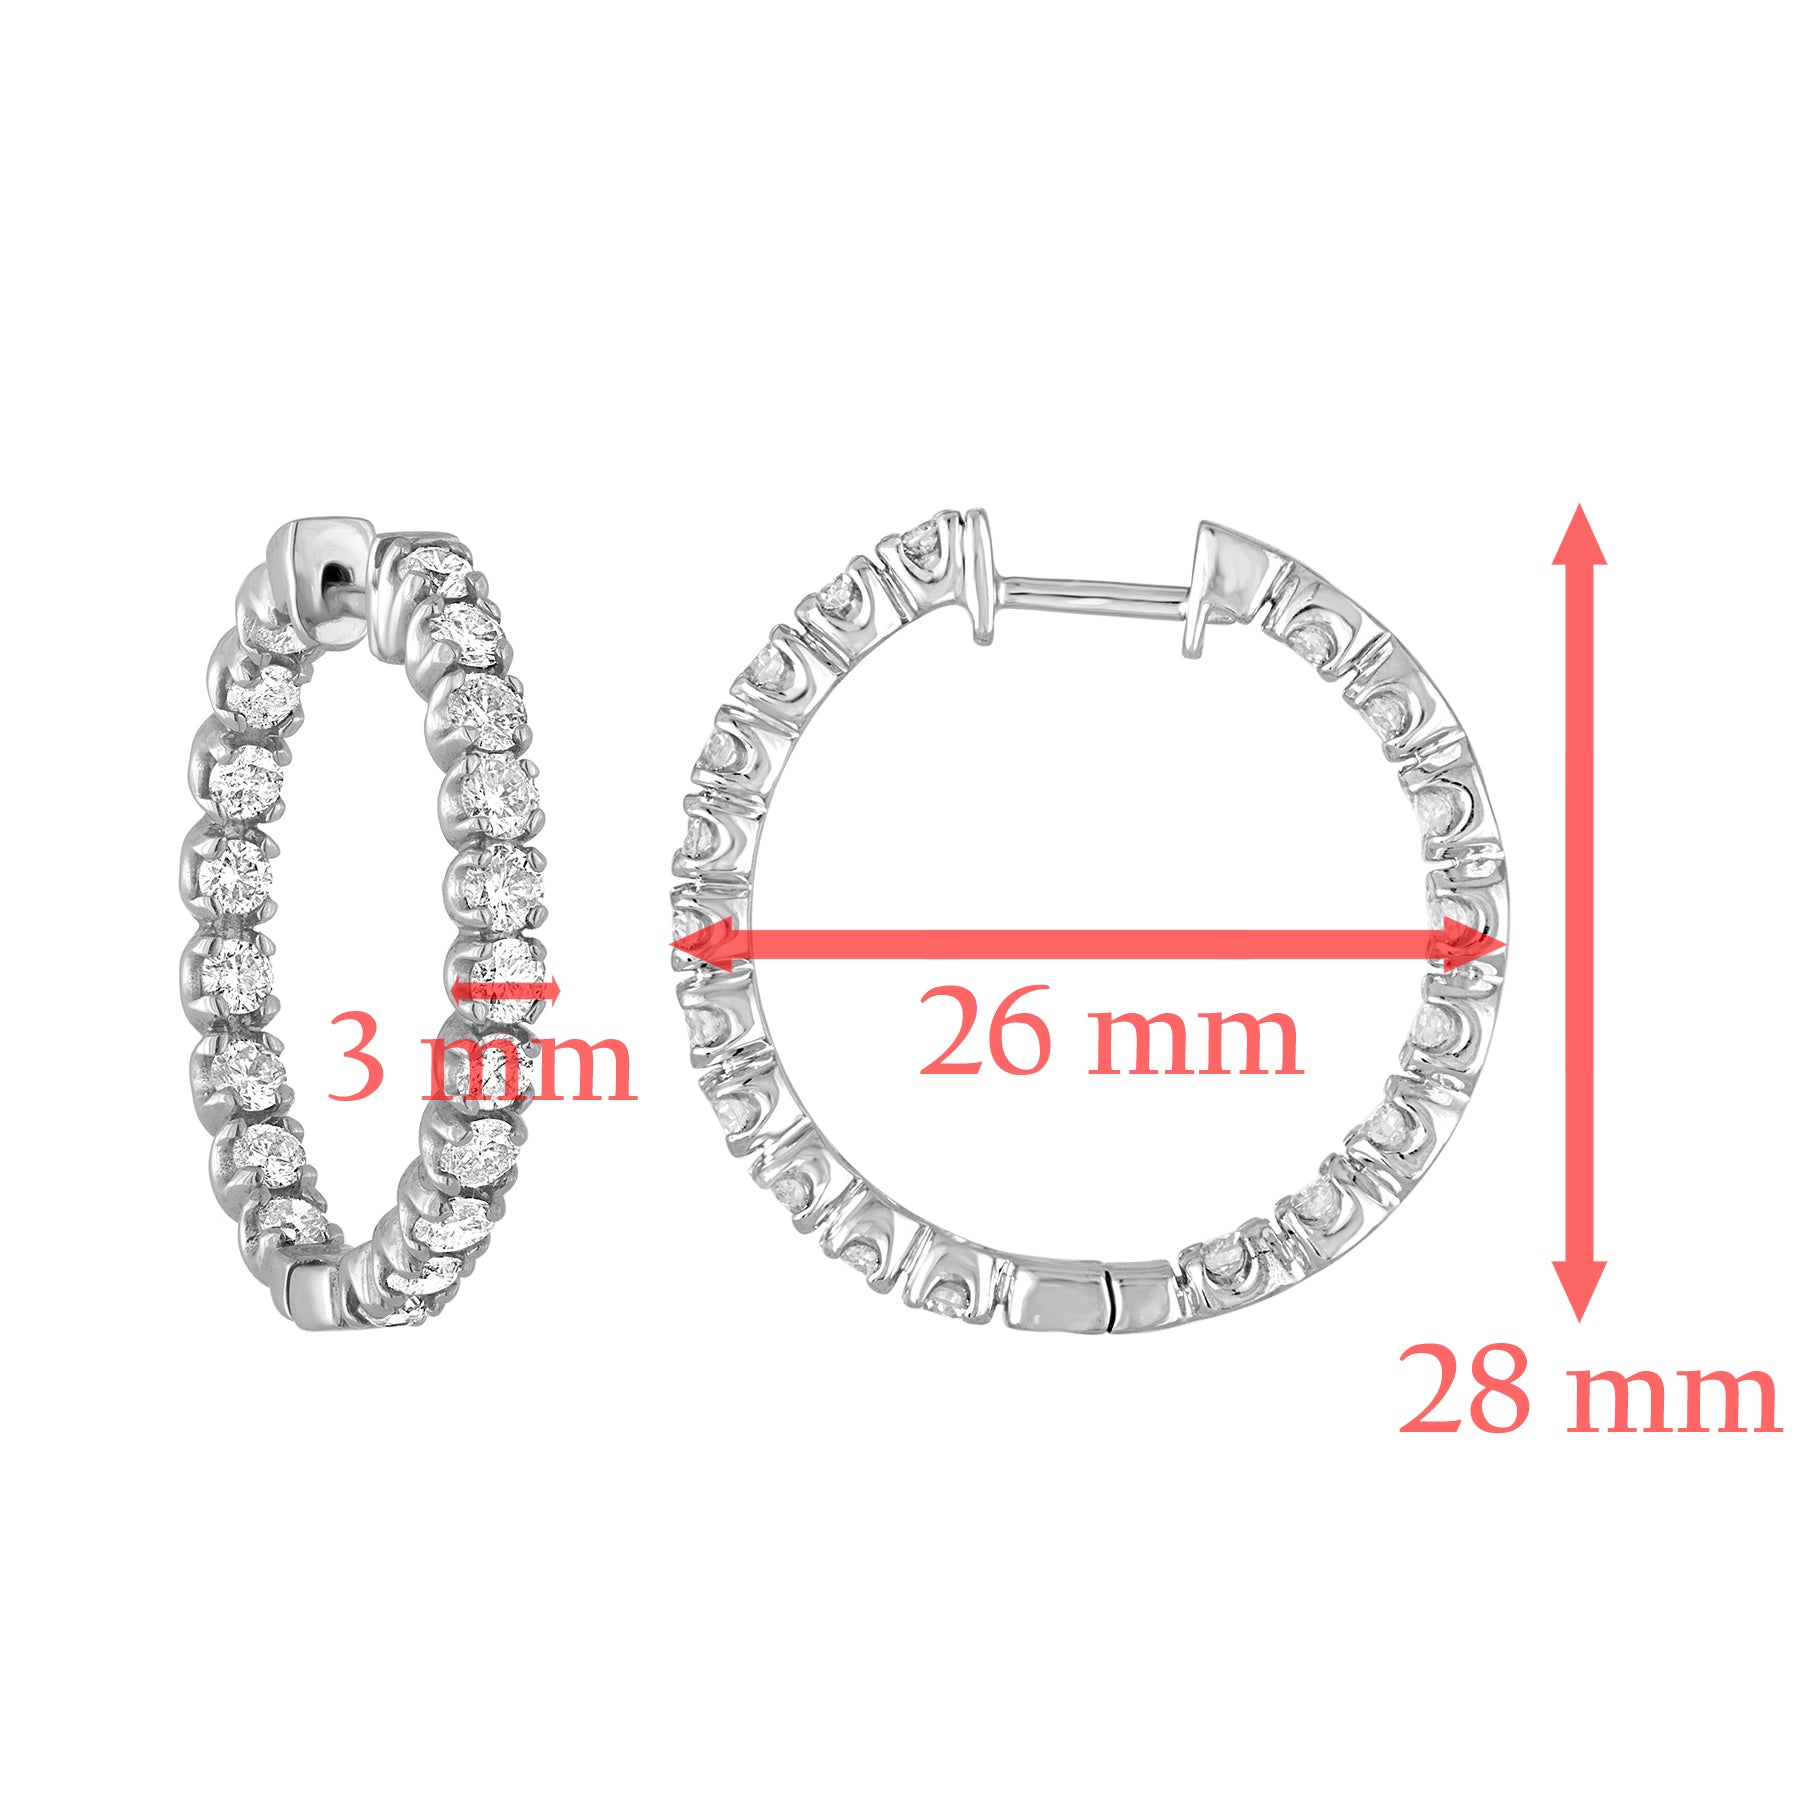 3 cttw I1-I2 Certified Diamond Inside Out Hoop Earrings 14K White Gold 1 inch